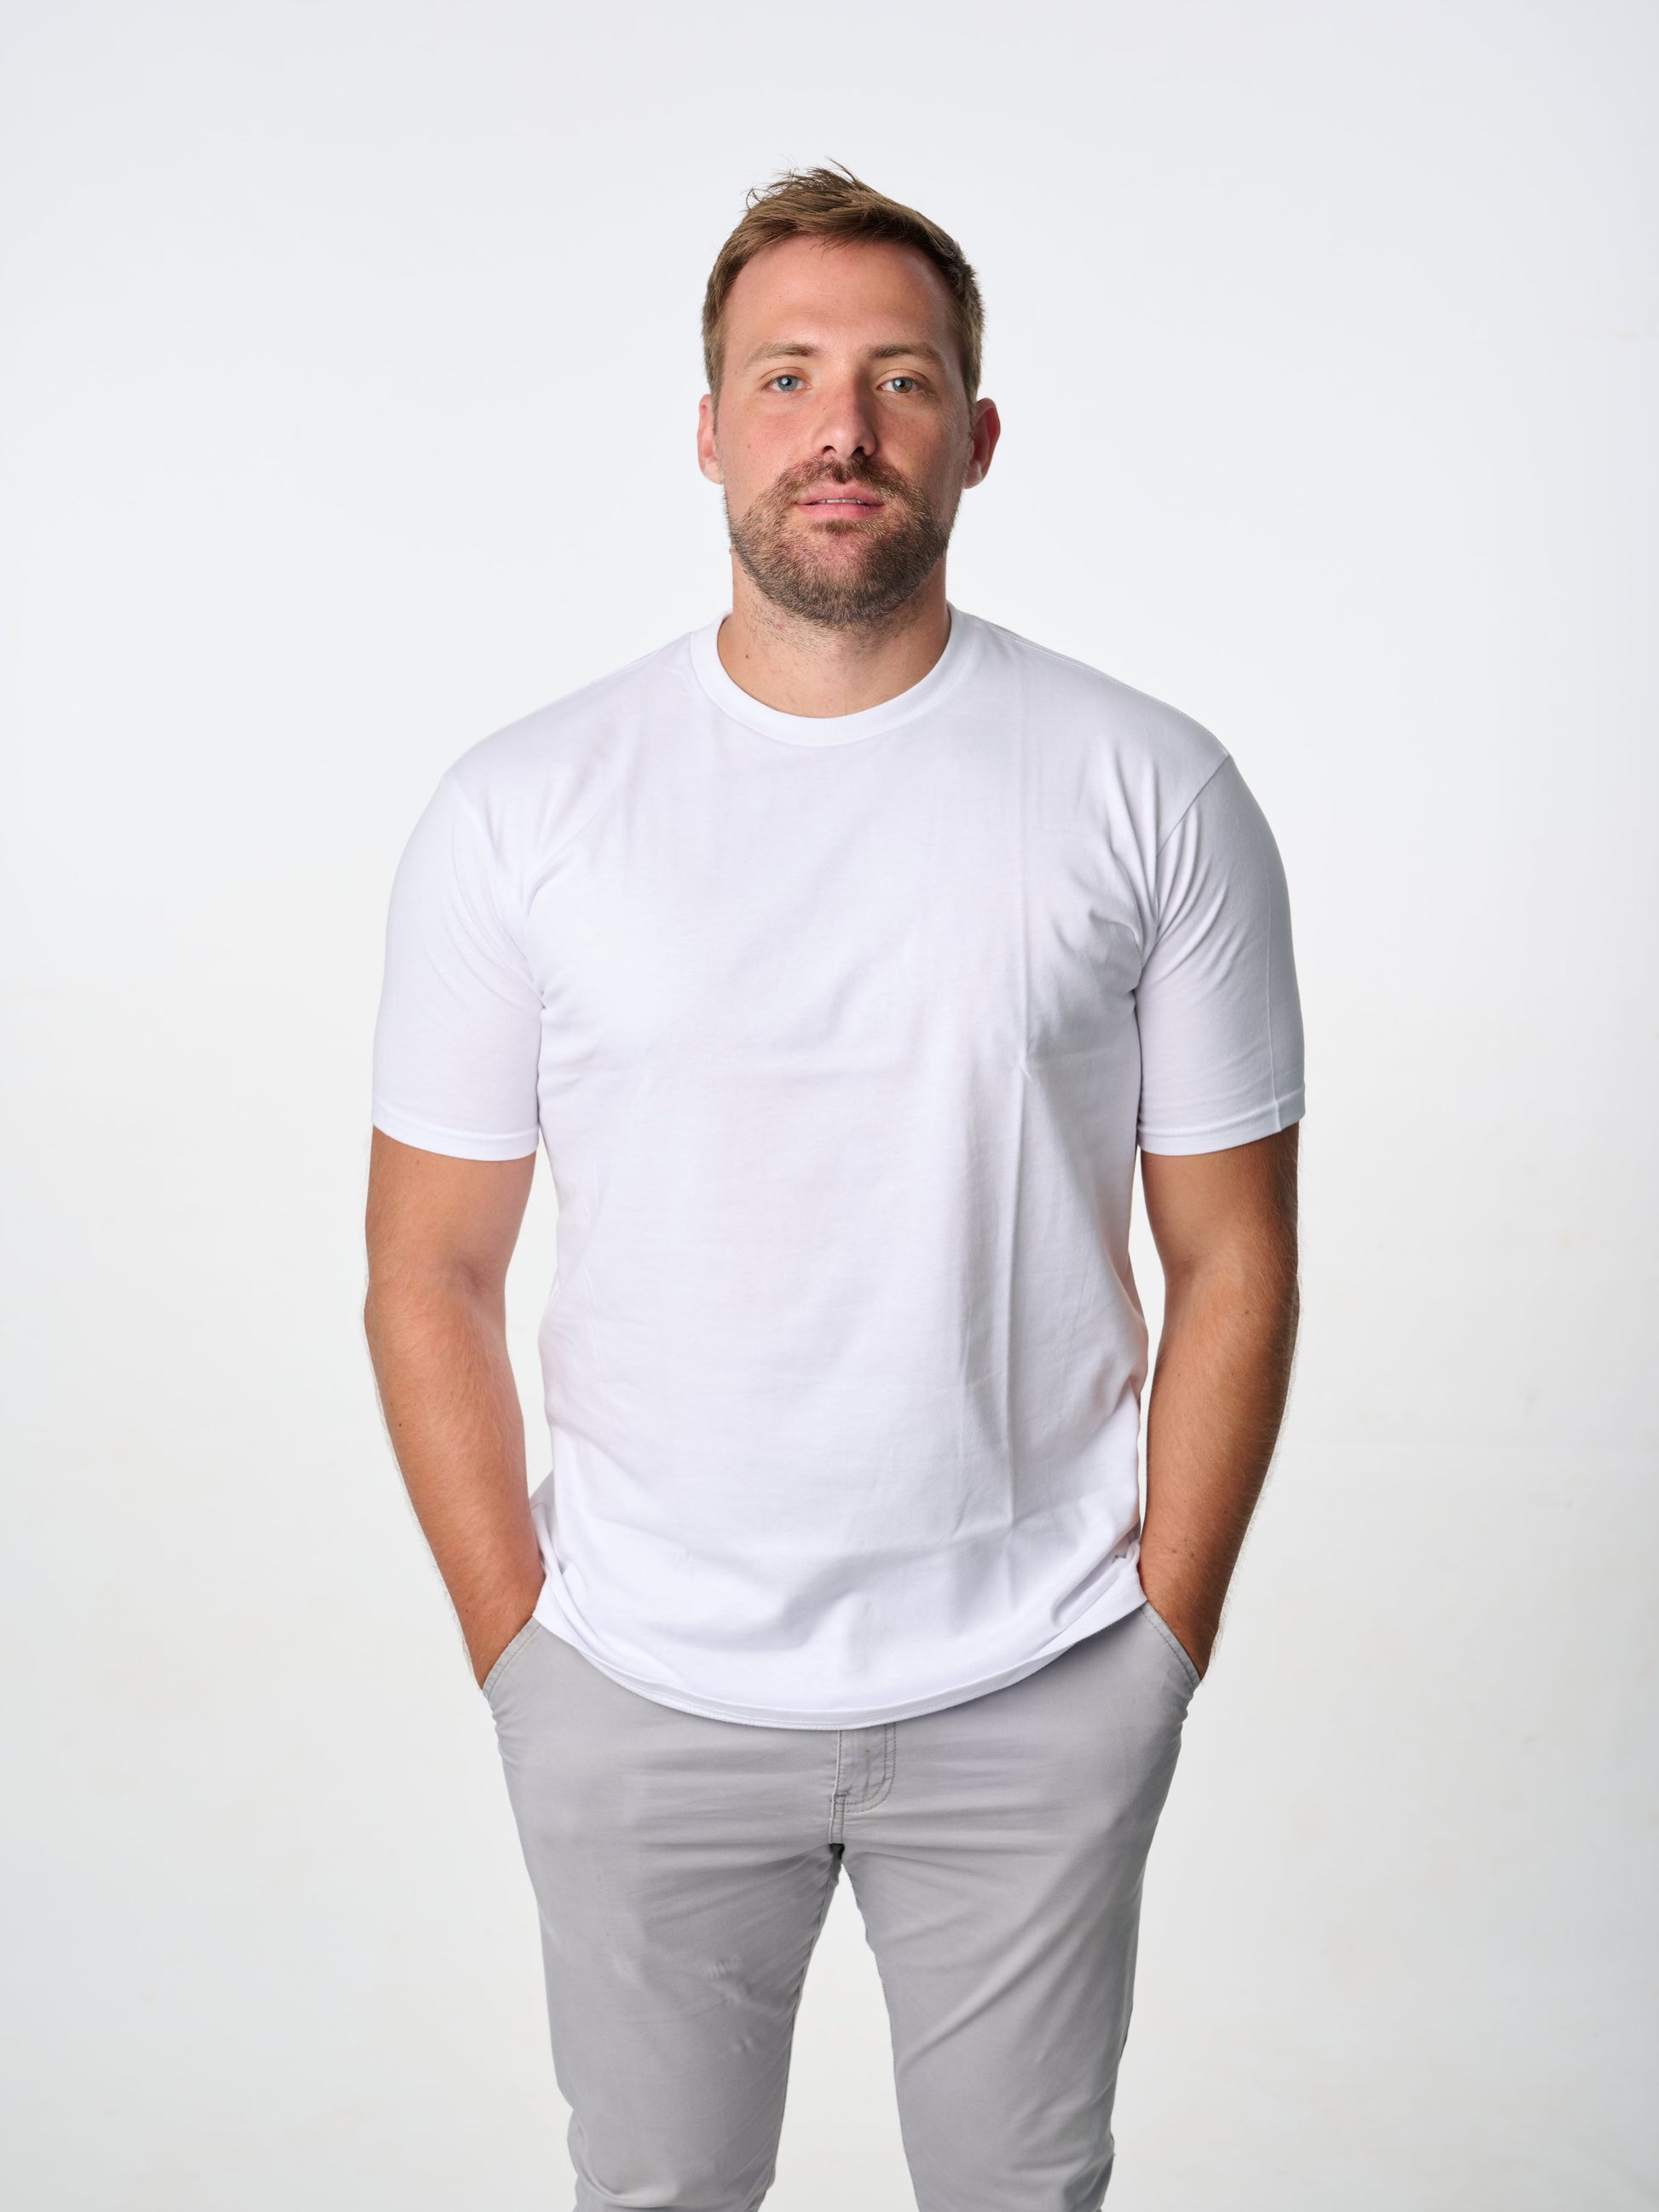 classic cut cotton crew neck t-shirt in white